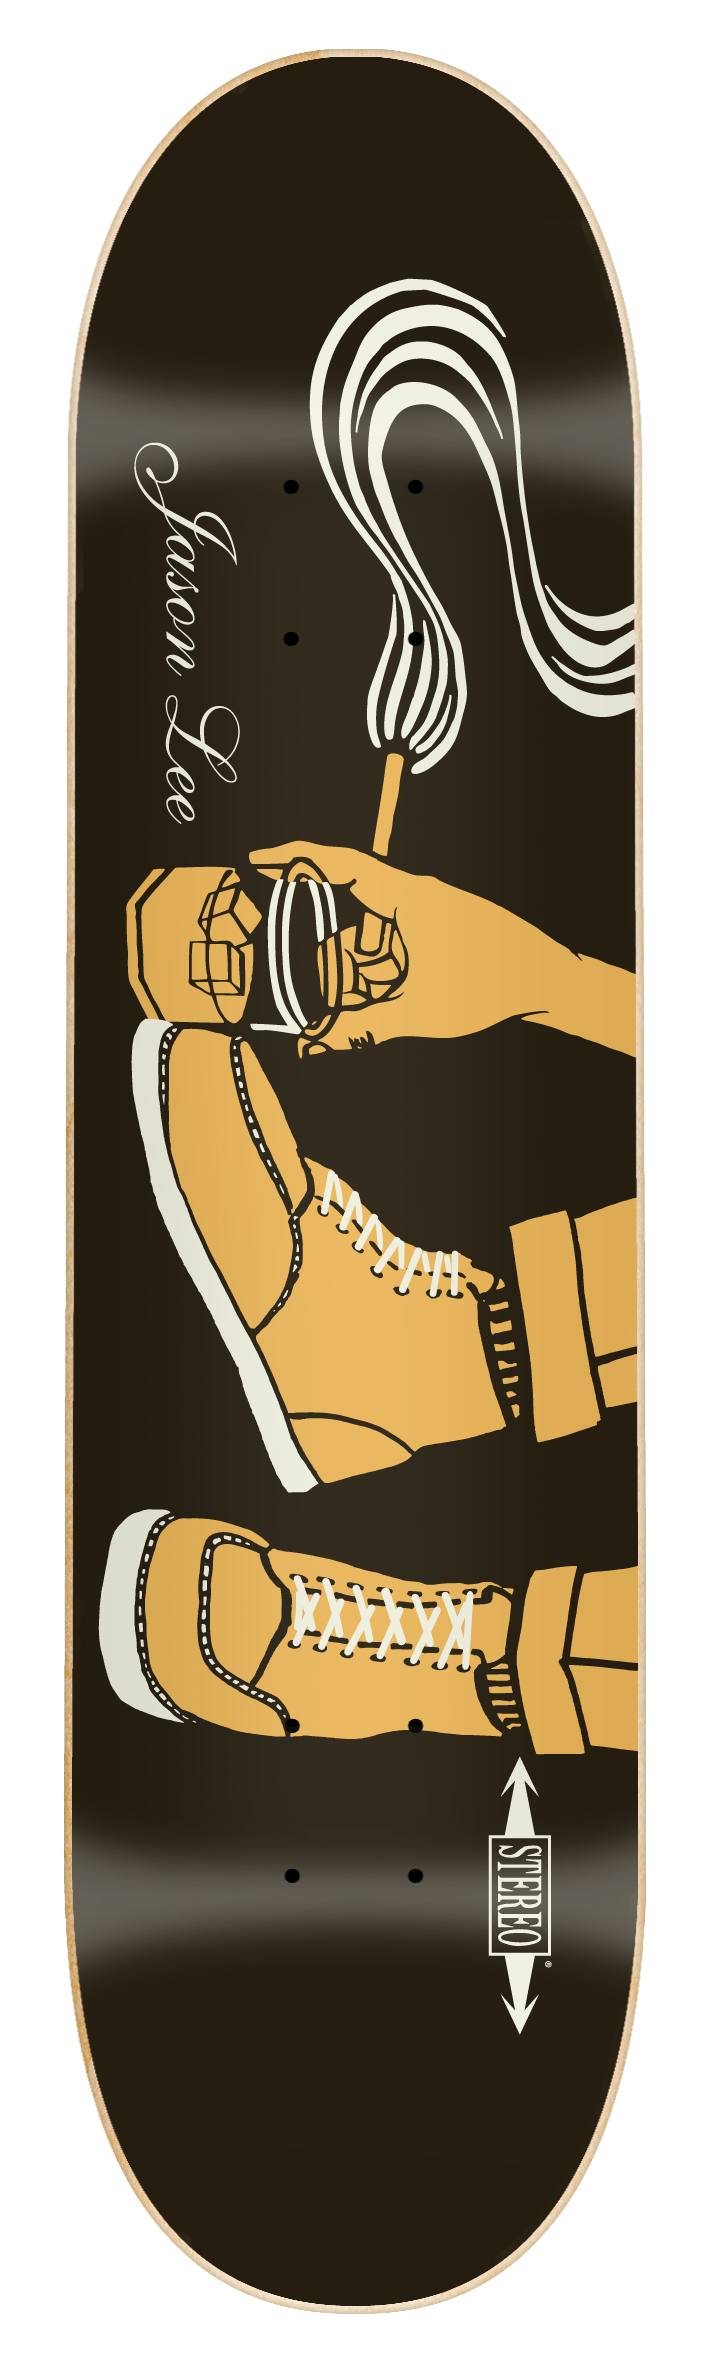 jlee-boots-brown-mockup.png